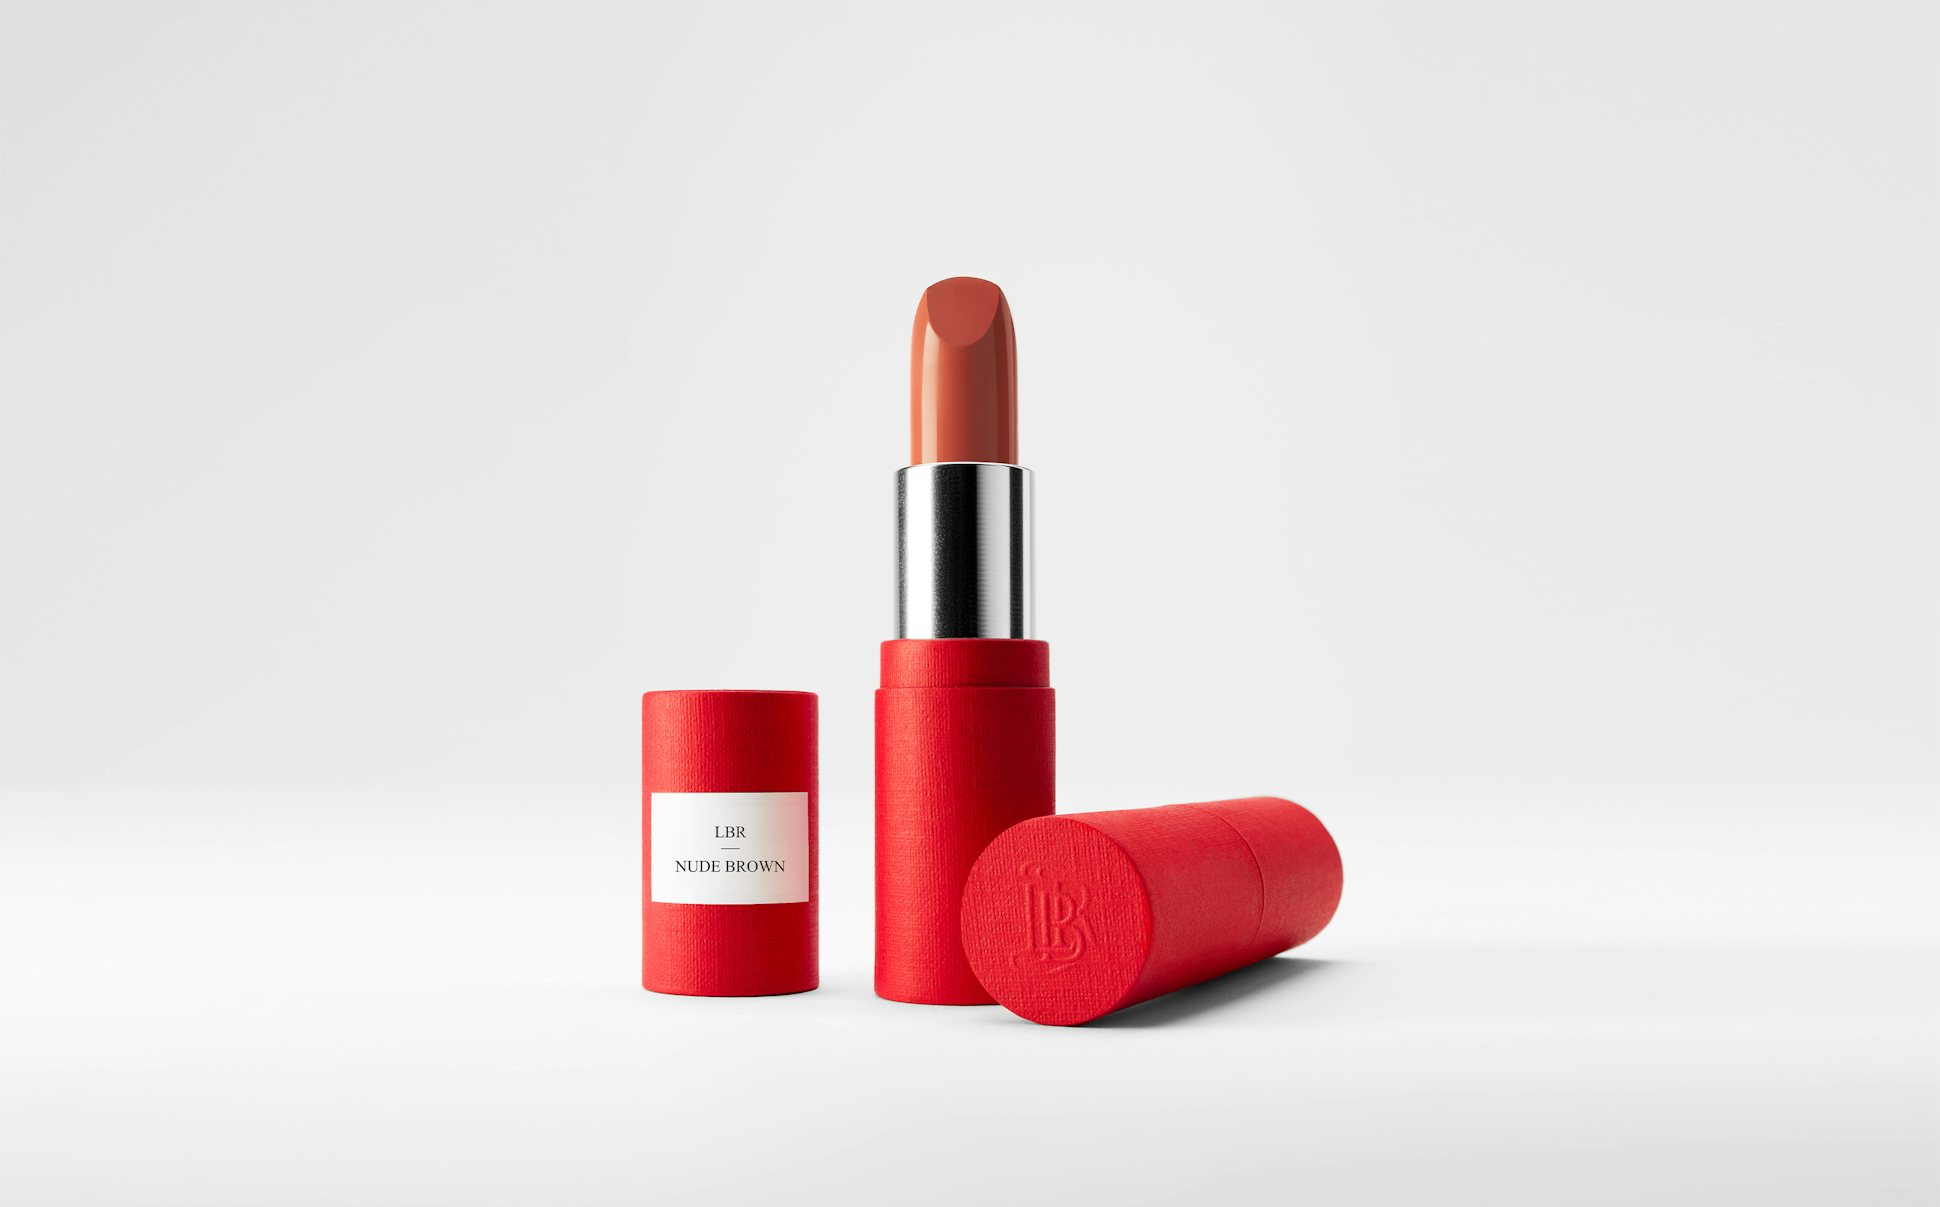 La bouche rouge Nude Brown lipstick in the red paper case